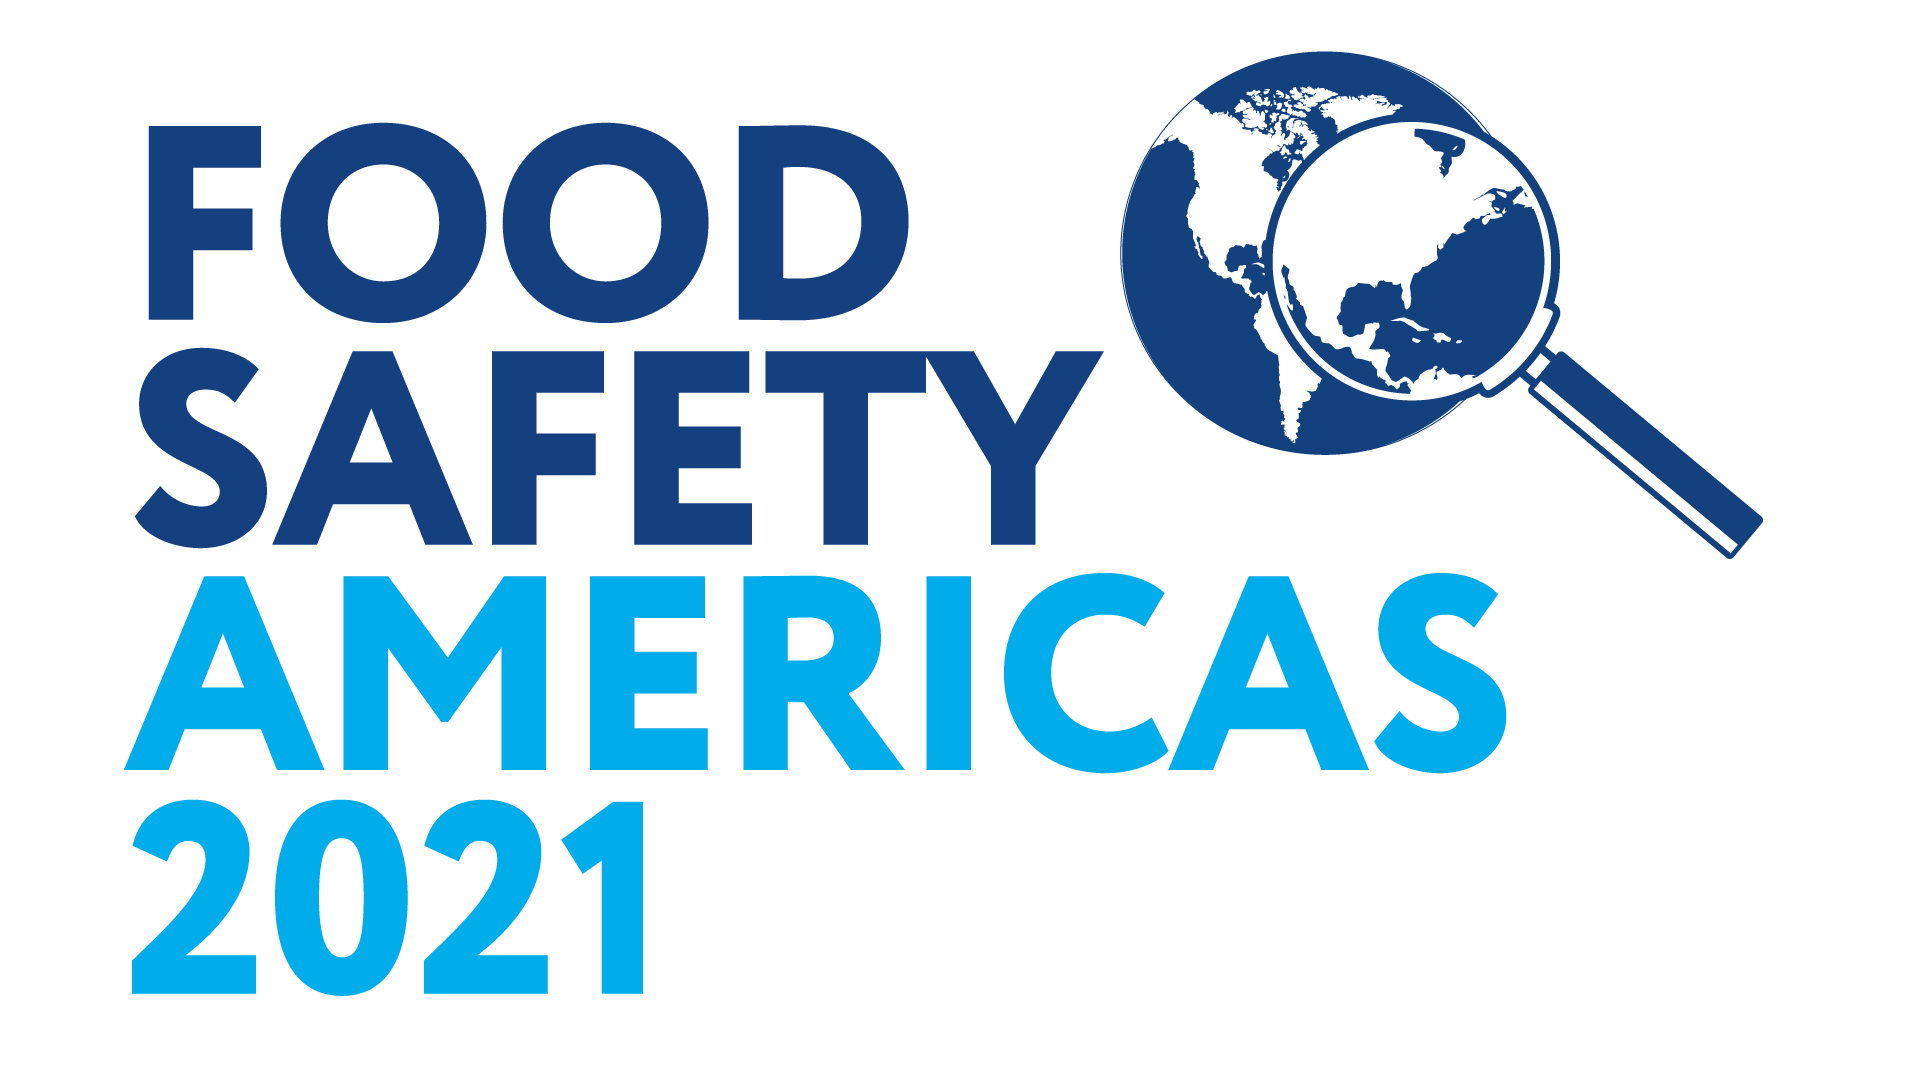 Food Safety Americas BRCGS